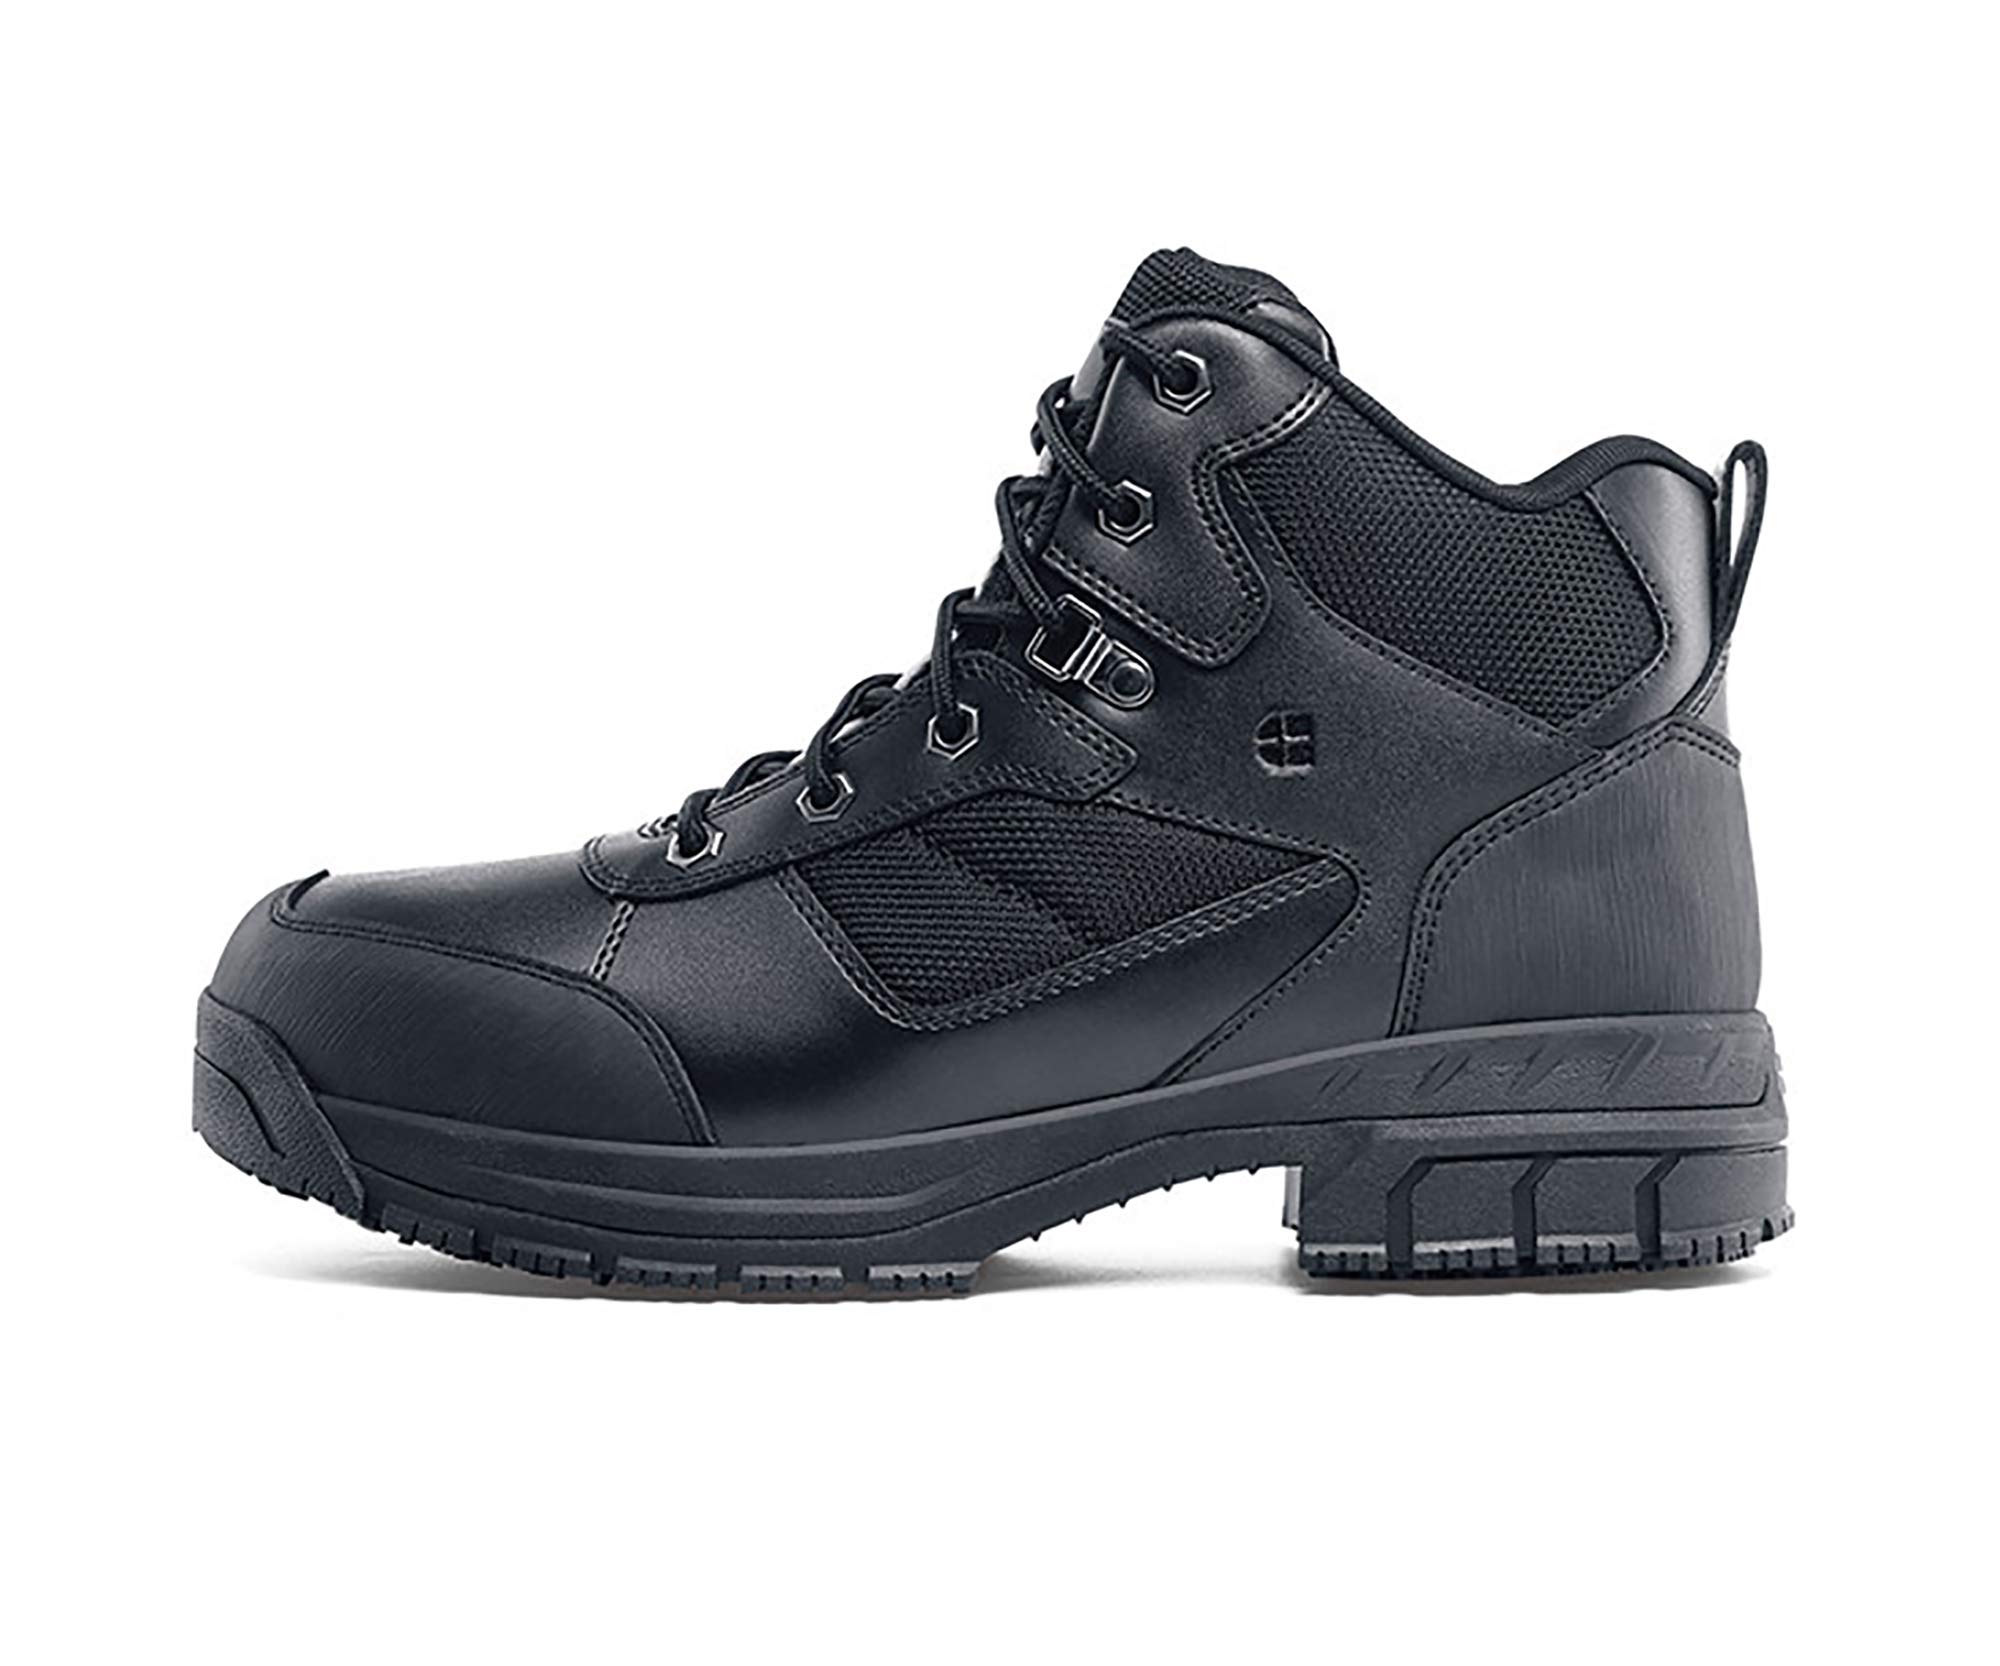 Shoes for Crews Voyager II, Men's, Women's, Unisex Steel Toe (ST) Work Boots, Slip Resistant, Water Resistant, Black